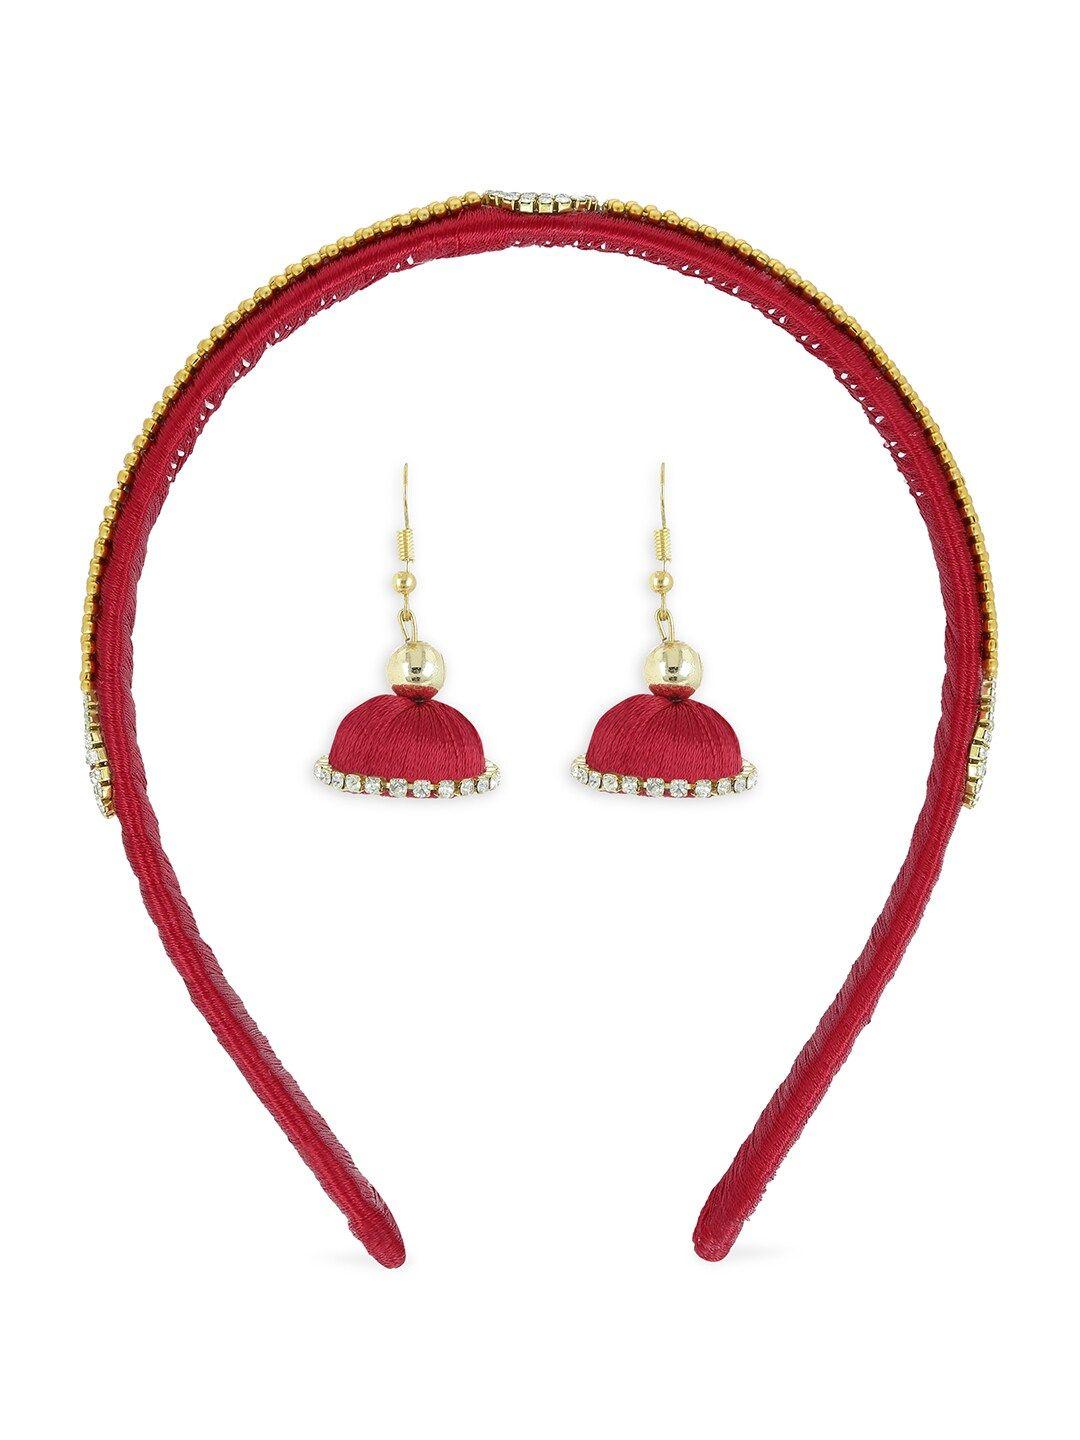 akshara girls red & gold-toned beaded hairband with jhumka